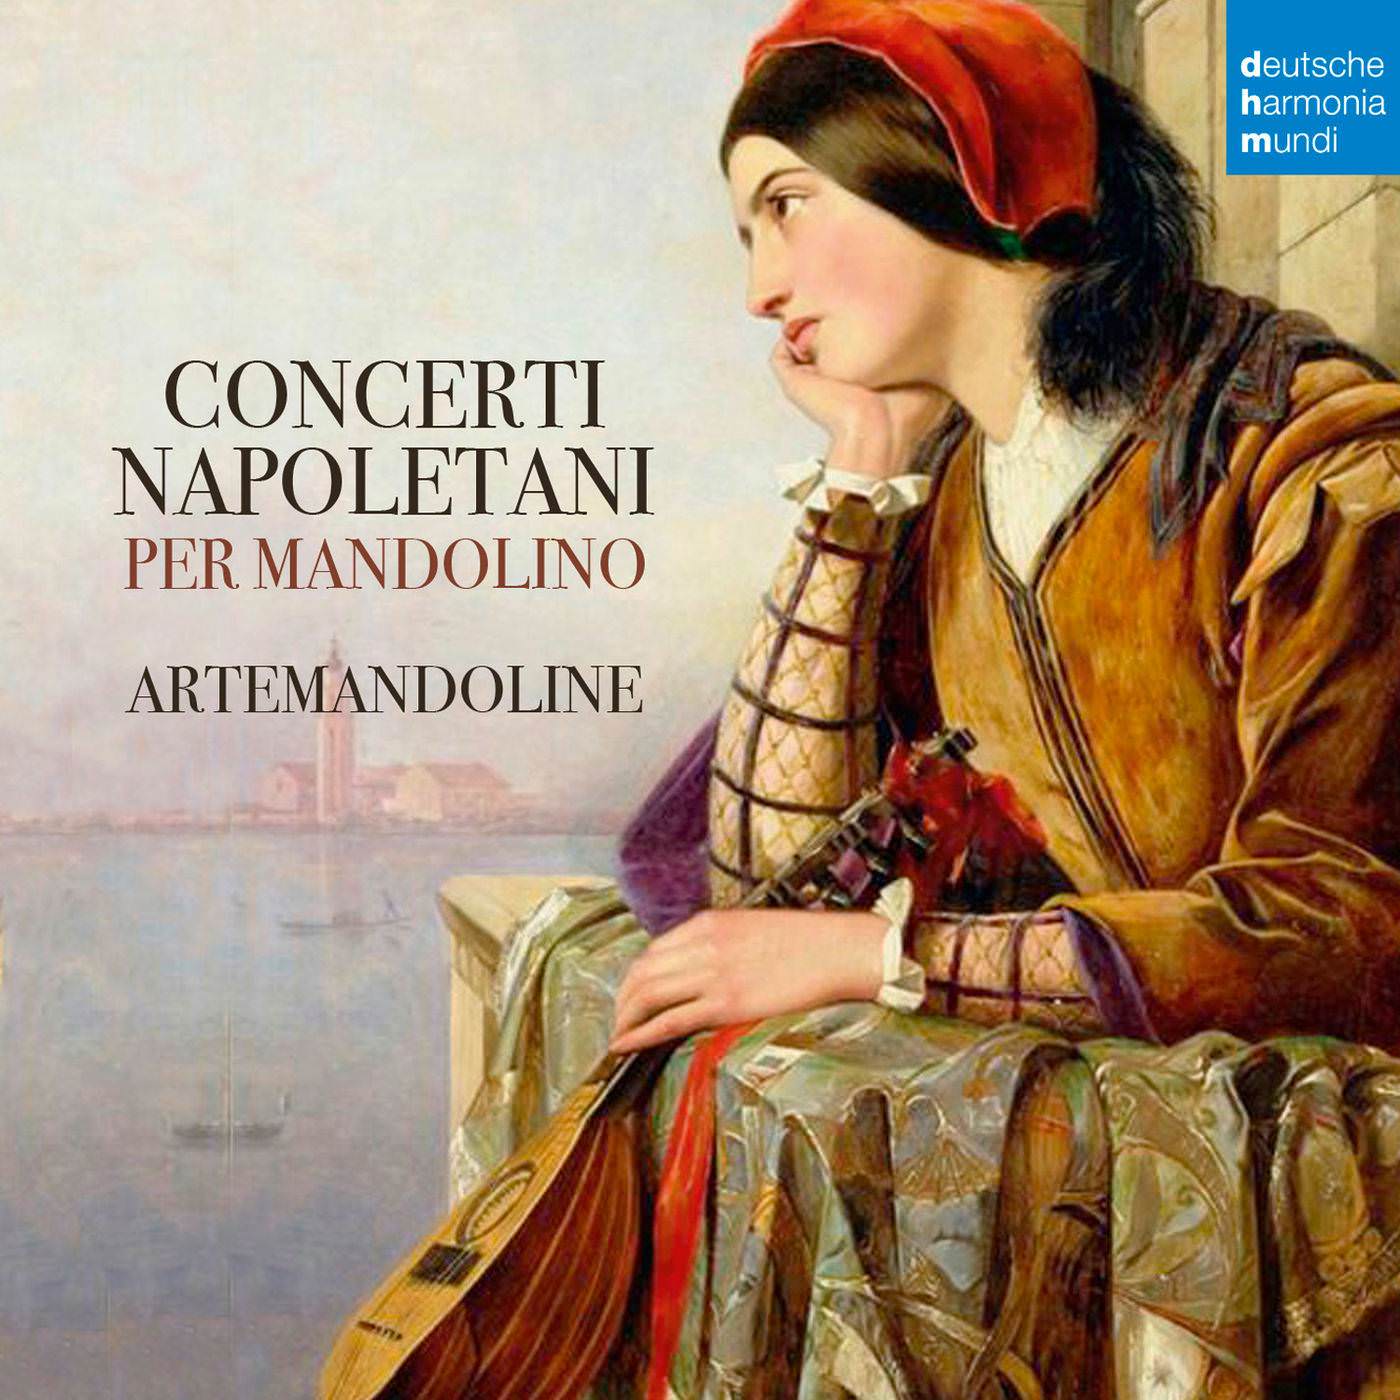 Artemandoline - Concerti Napoletani per Mandolino (2018) [FLAC 24bit/48kHz]